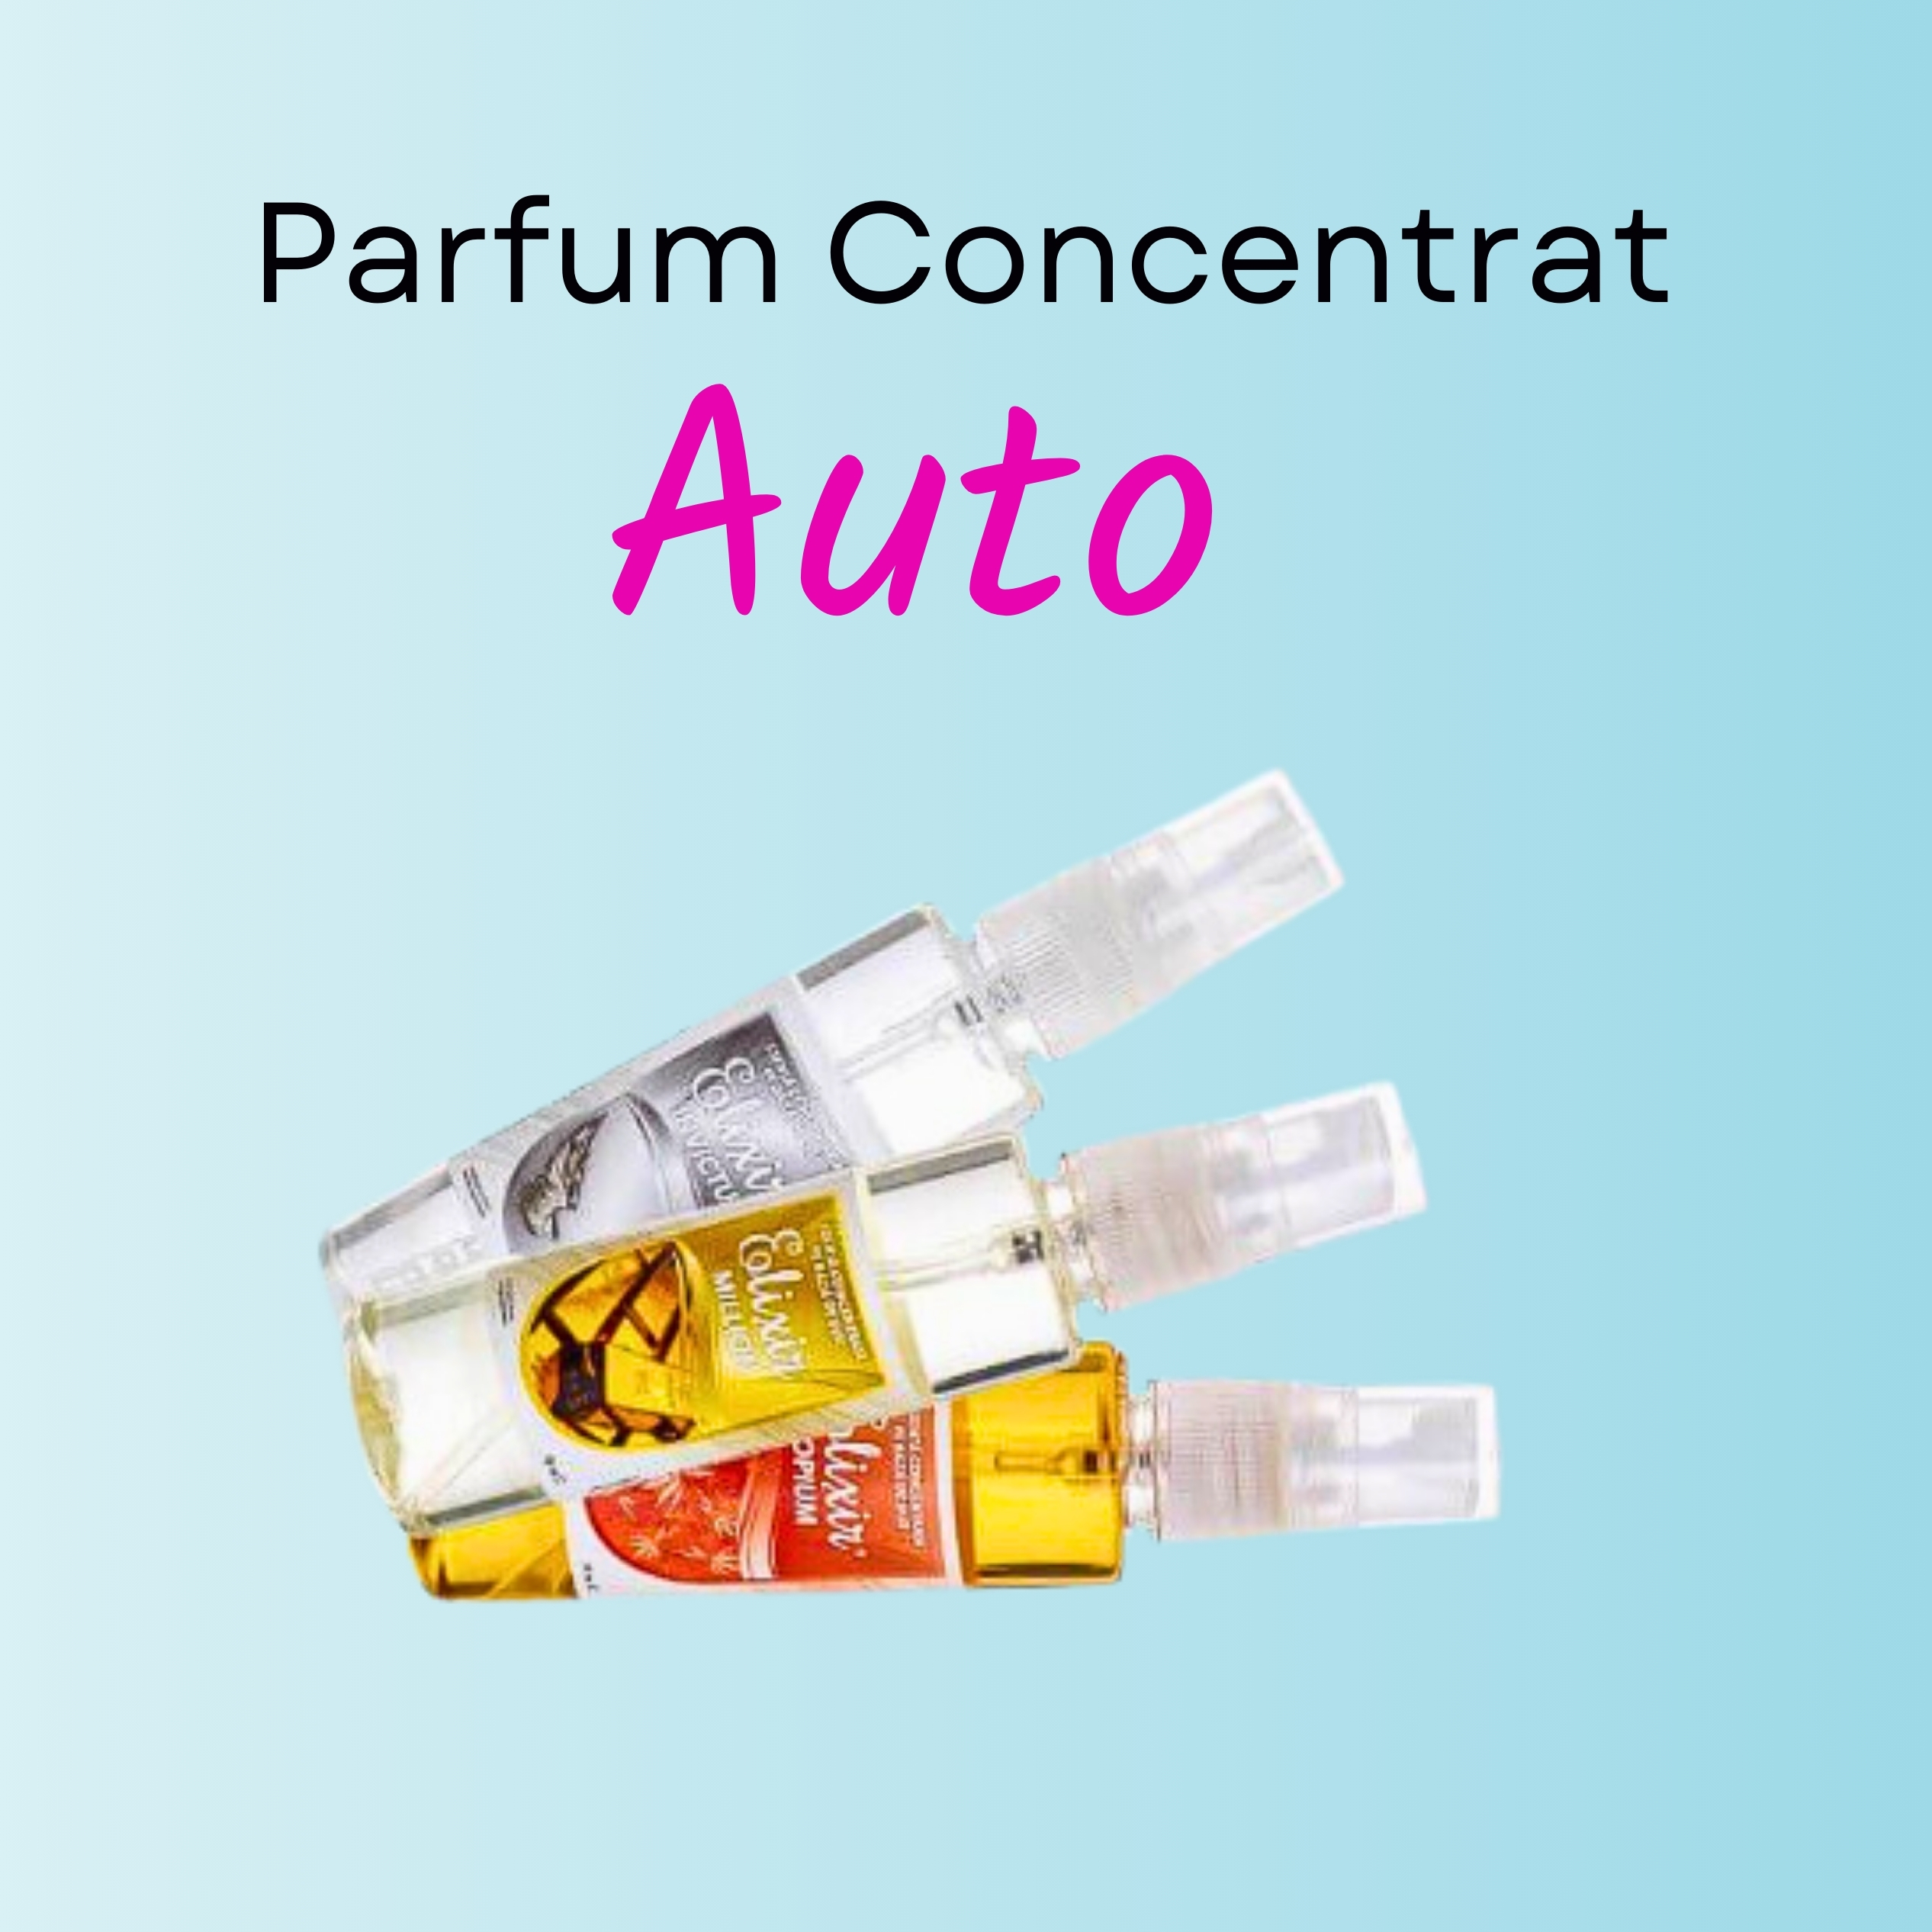 Parfum concentrat auto